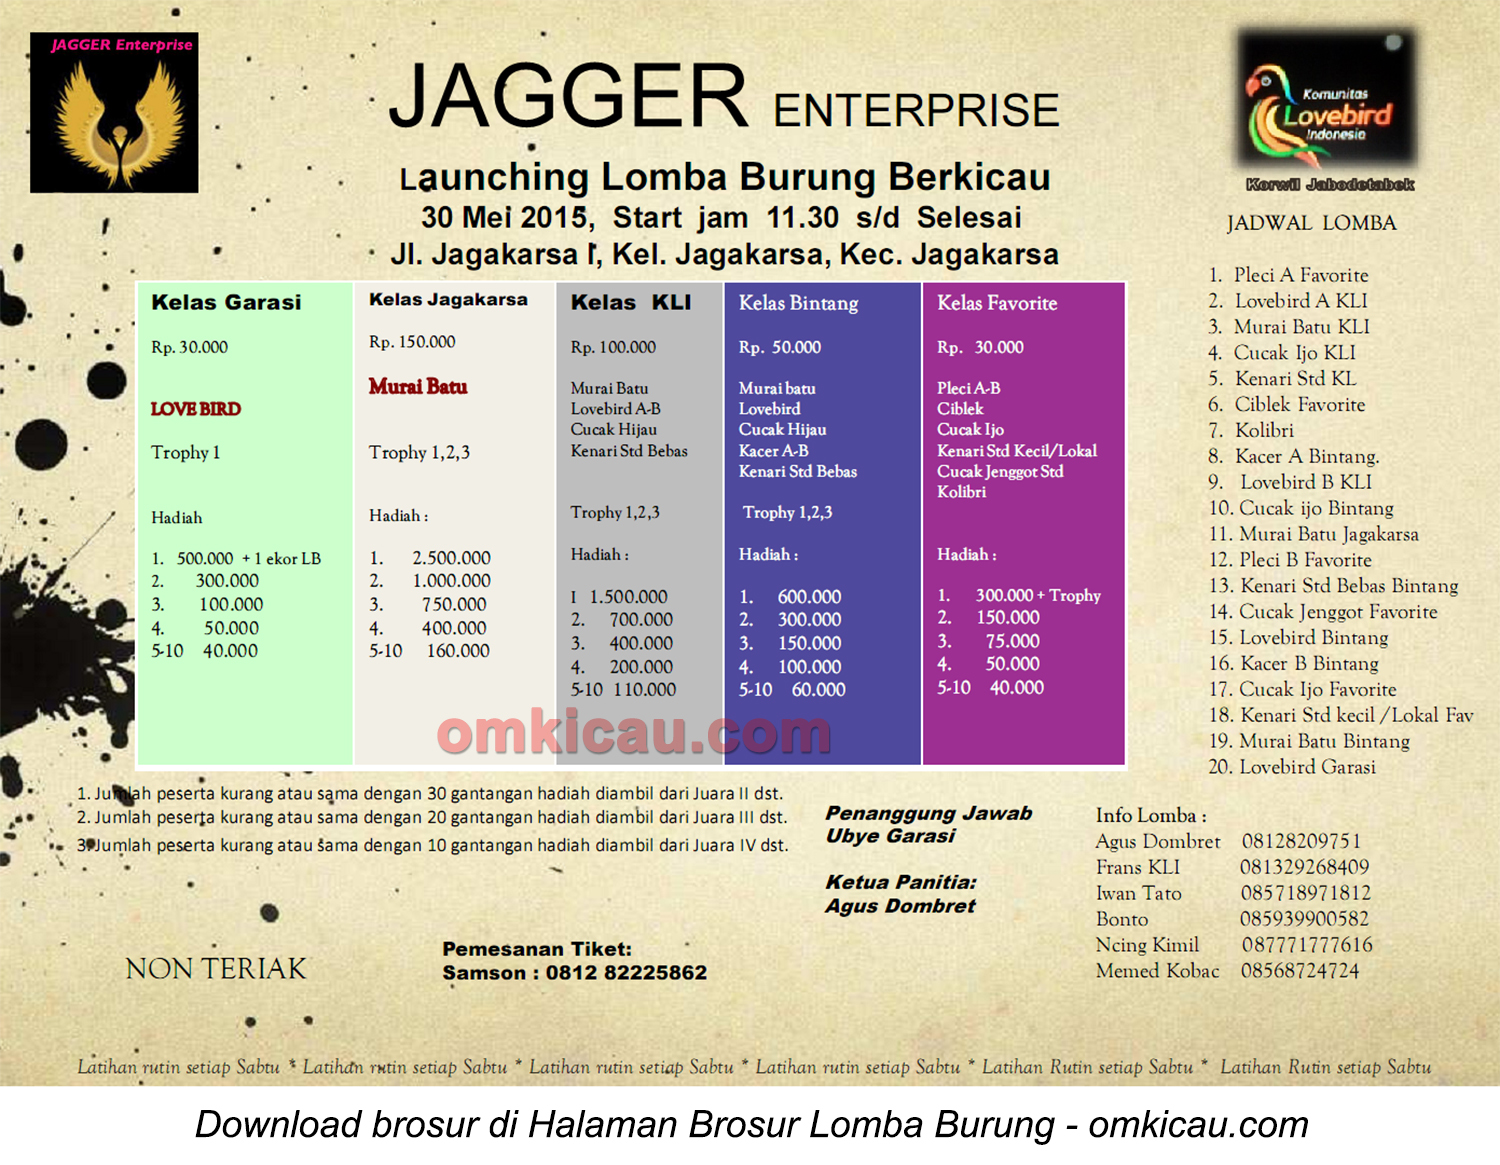 Brosur Lomba Burung Berkicau Launching Jagger Enterprise, Jakarta, 30 Mei 2015